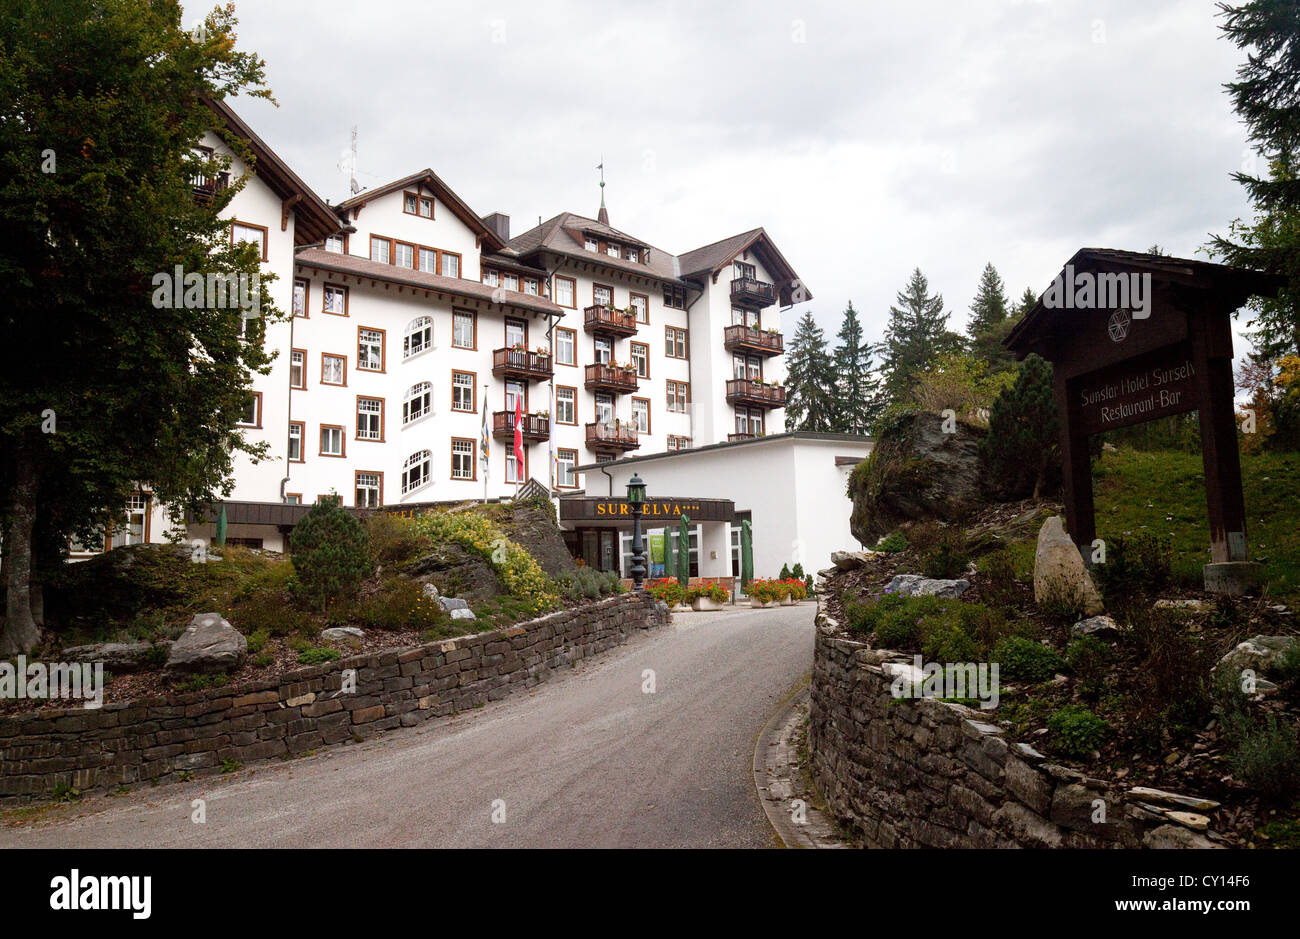 The Surselva Hotel, Flims town, Graubunden, Switzerland Europe Stock Photo